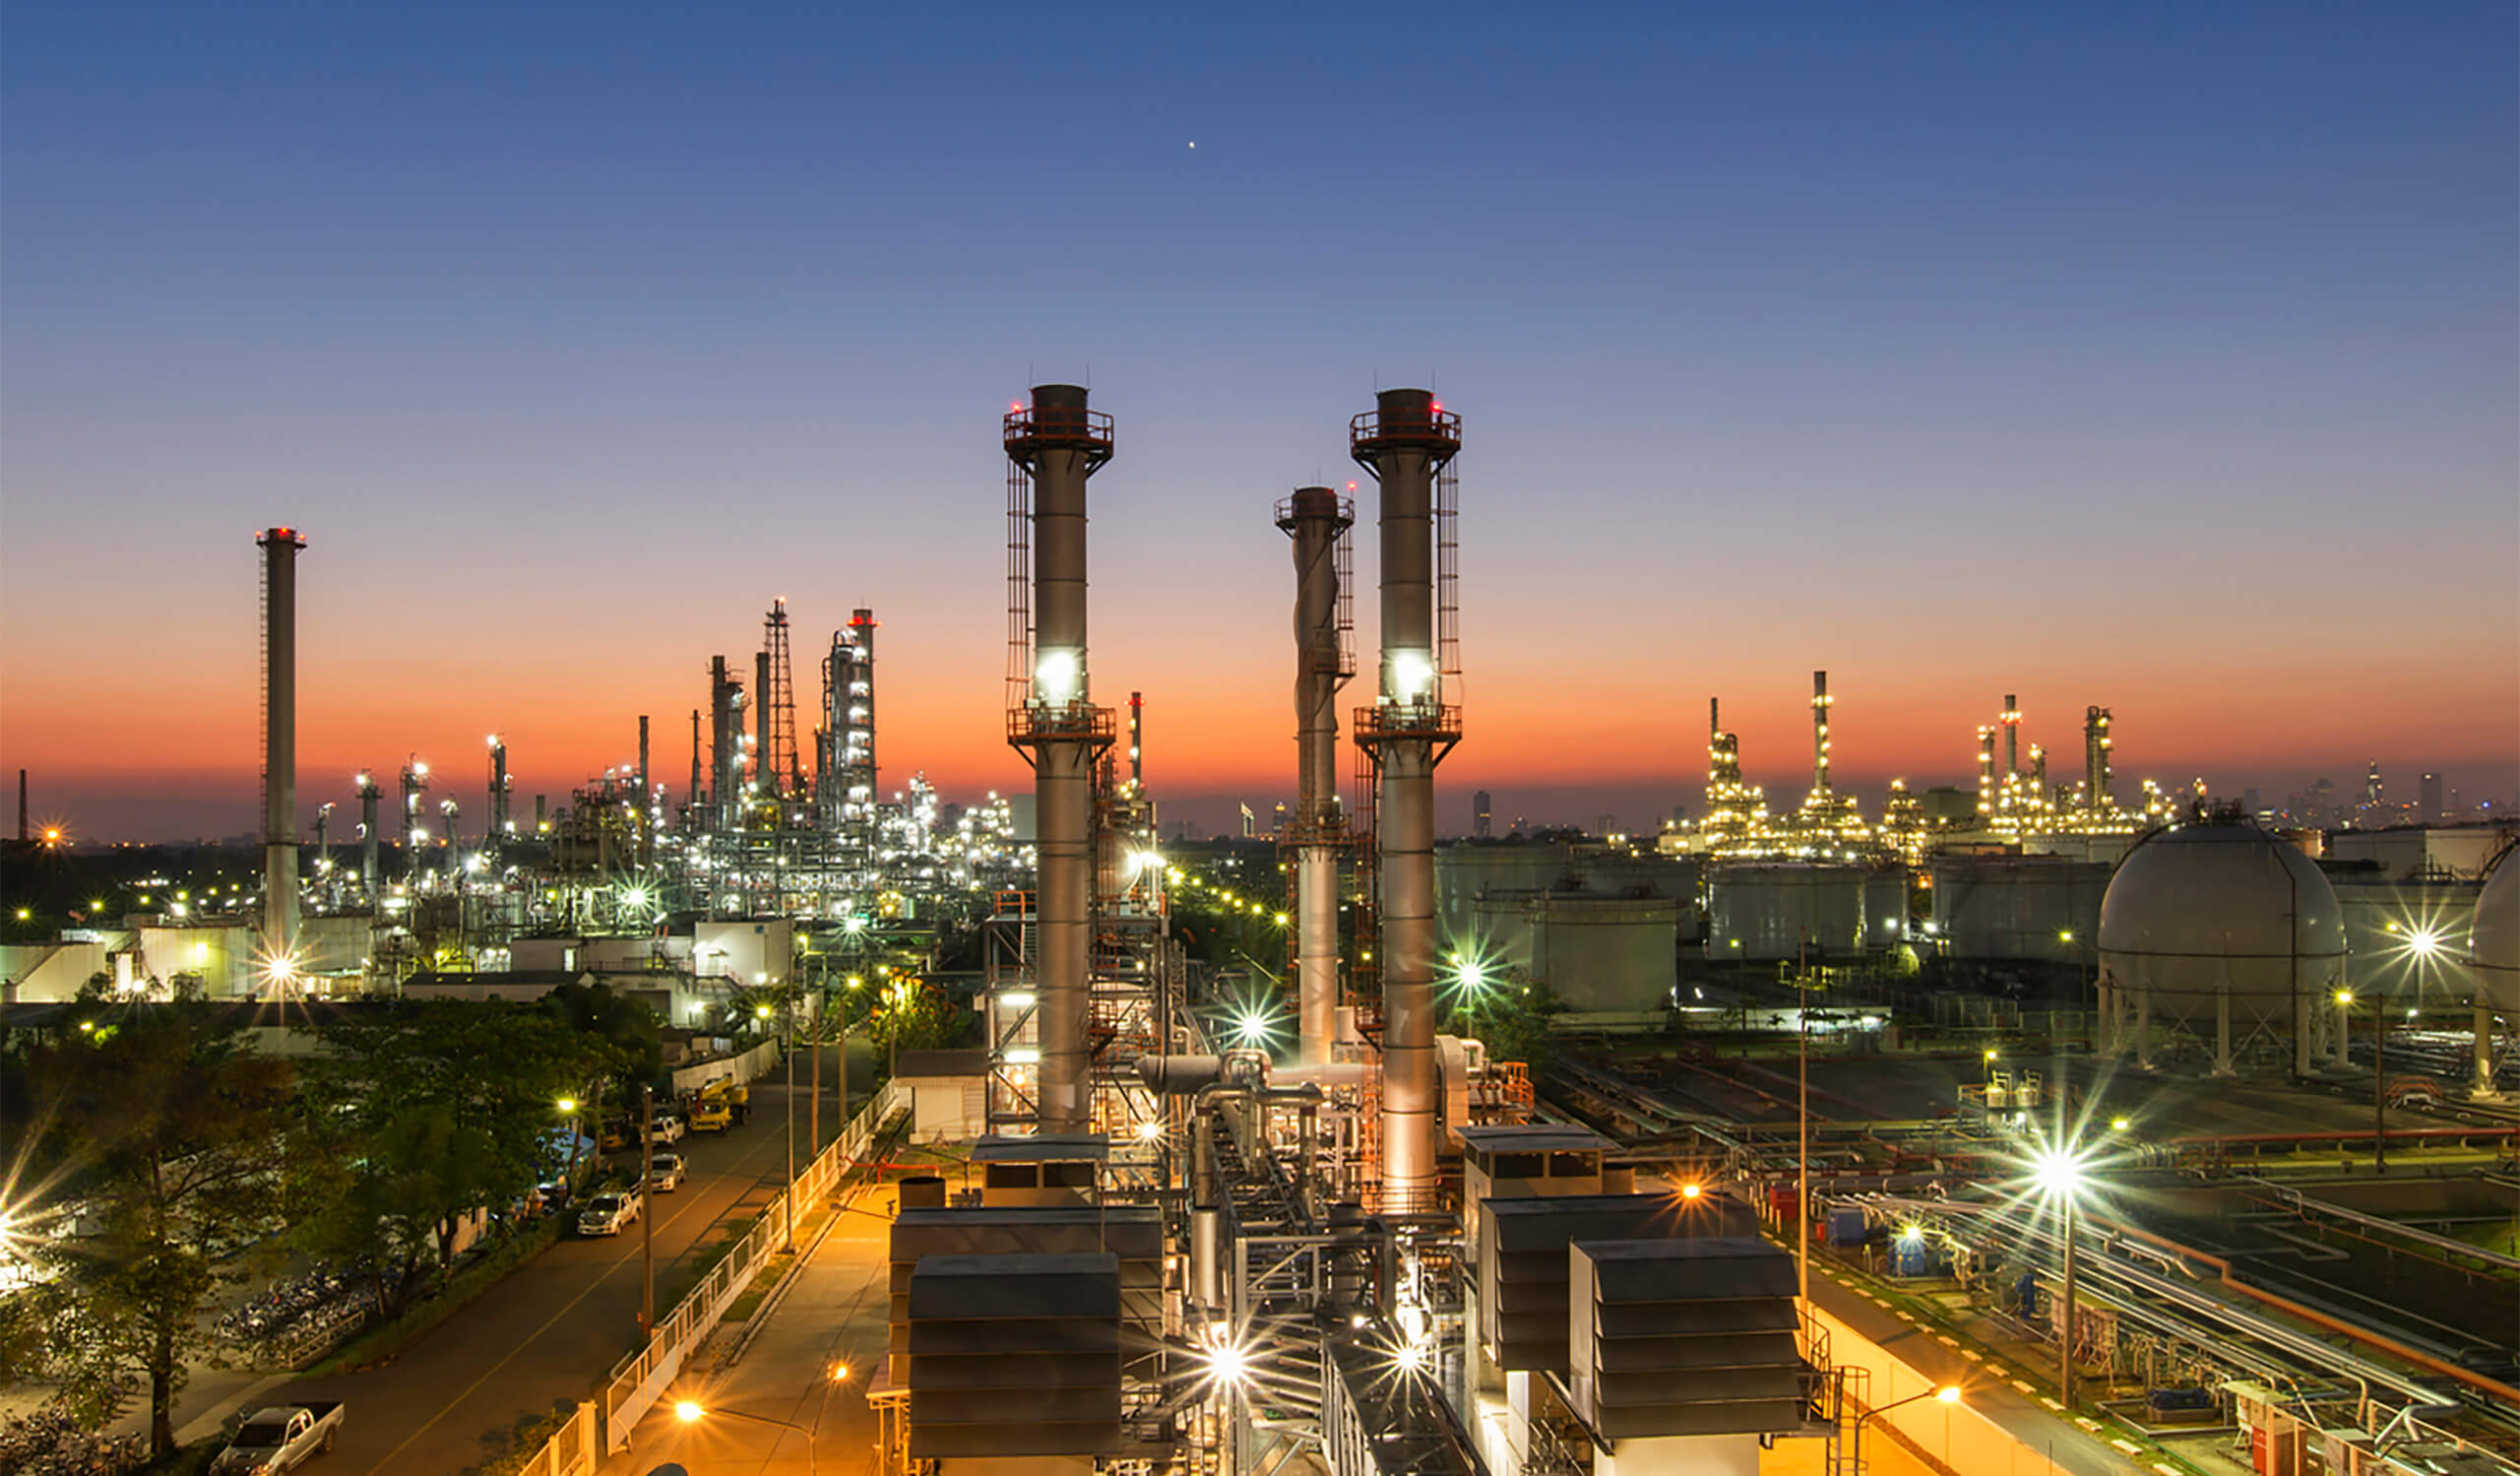 B&W Provides Services for ExxonMobil Ethylene Expansion